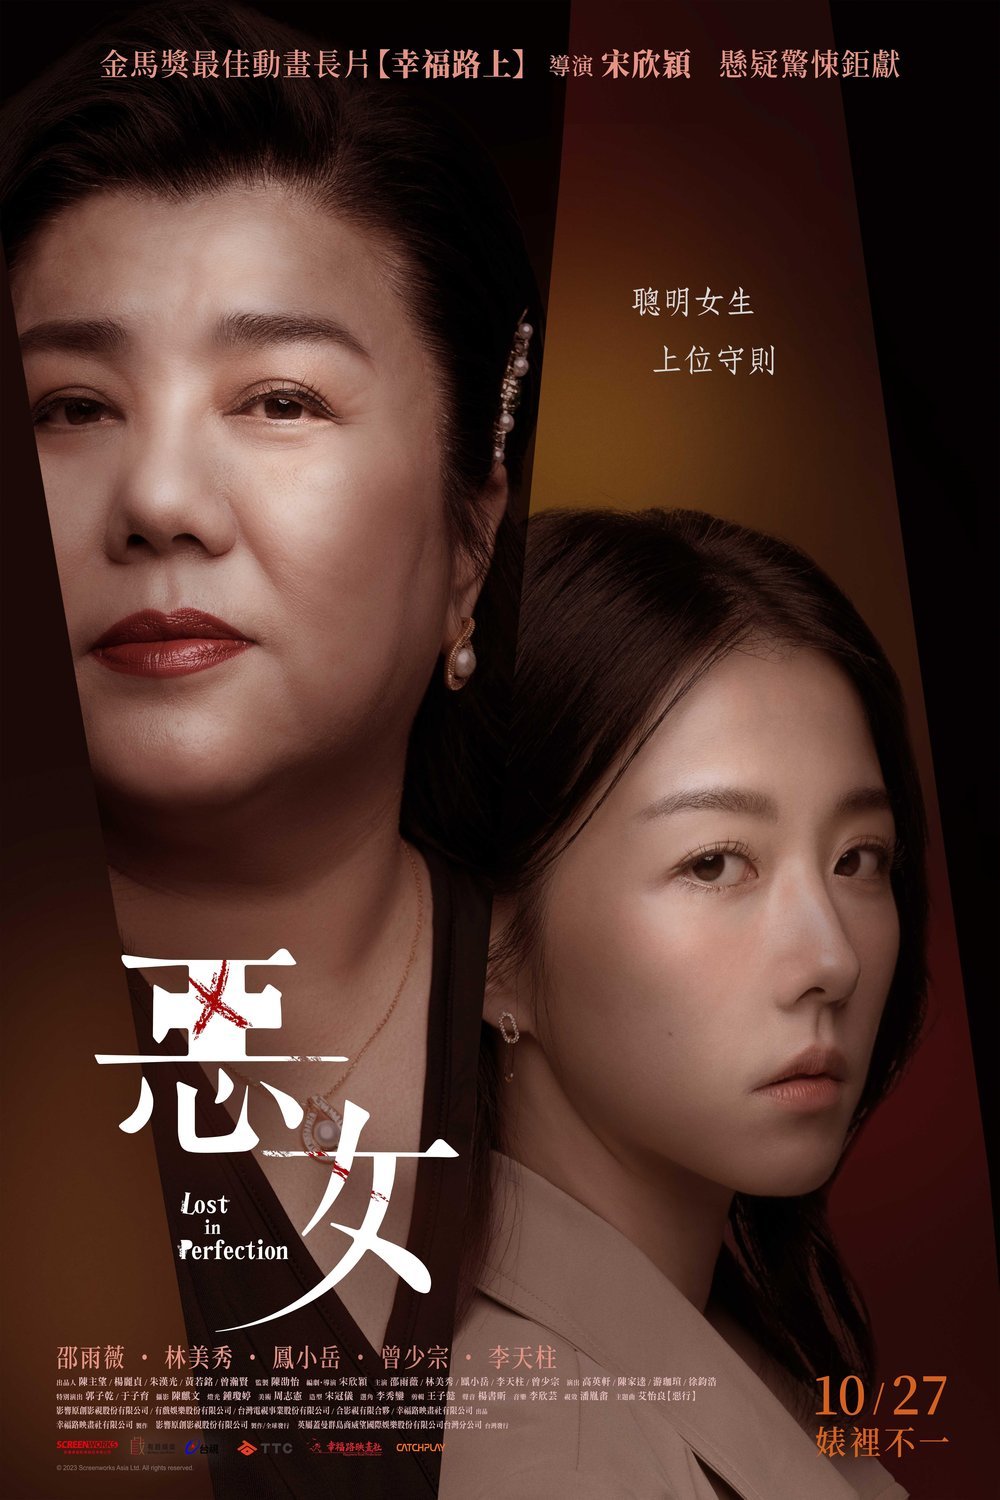 Mandarin poster of the movie O Nu